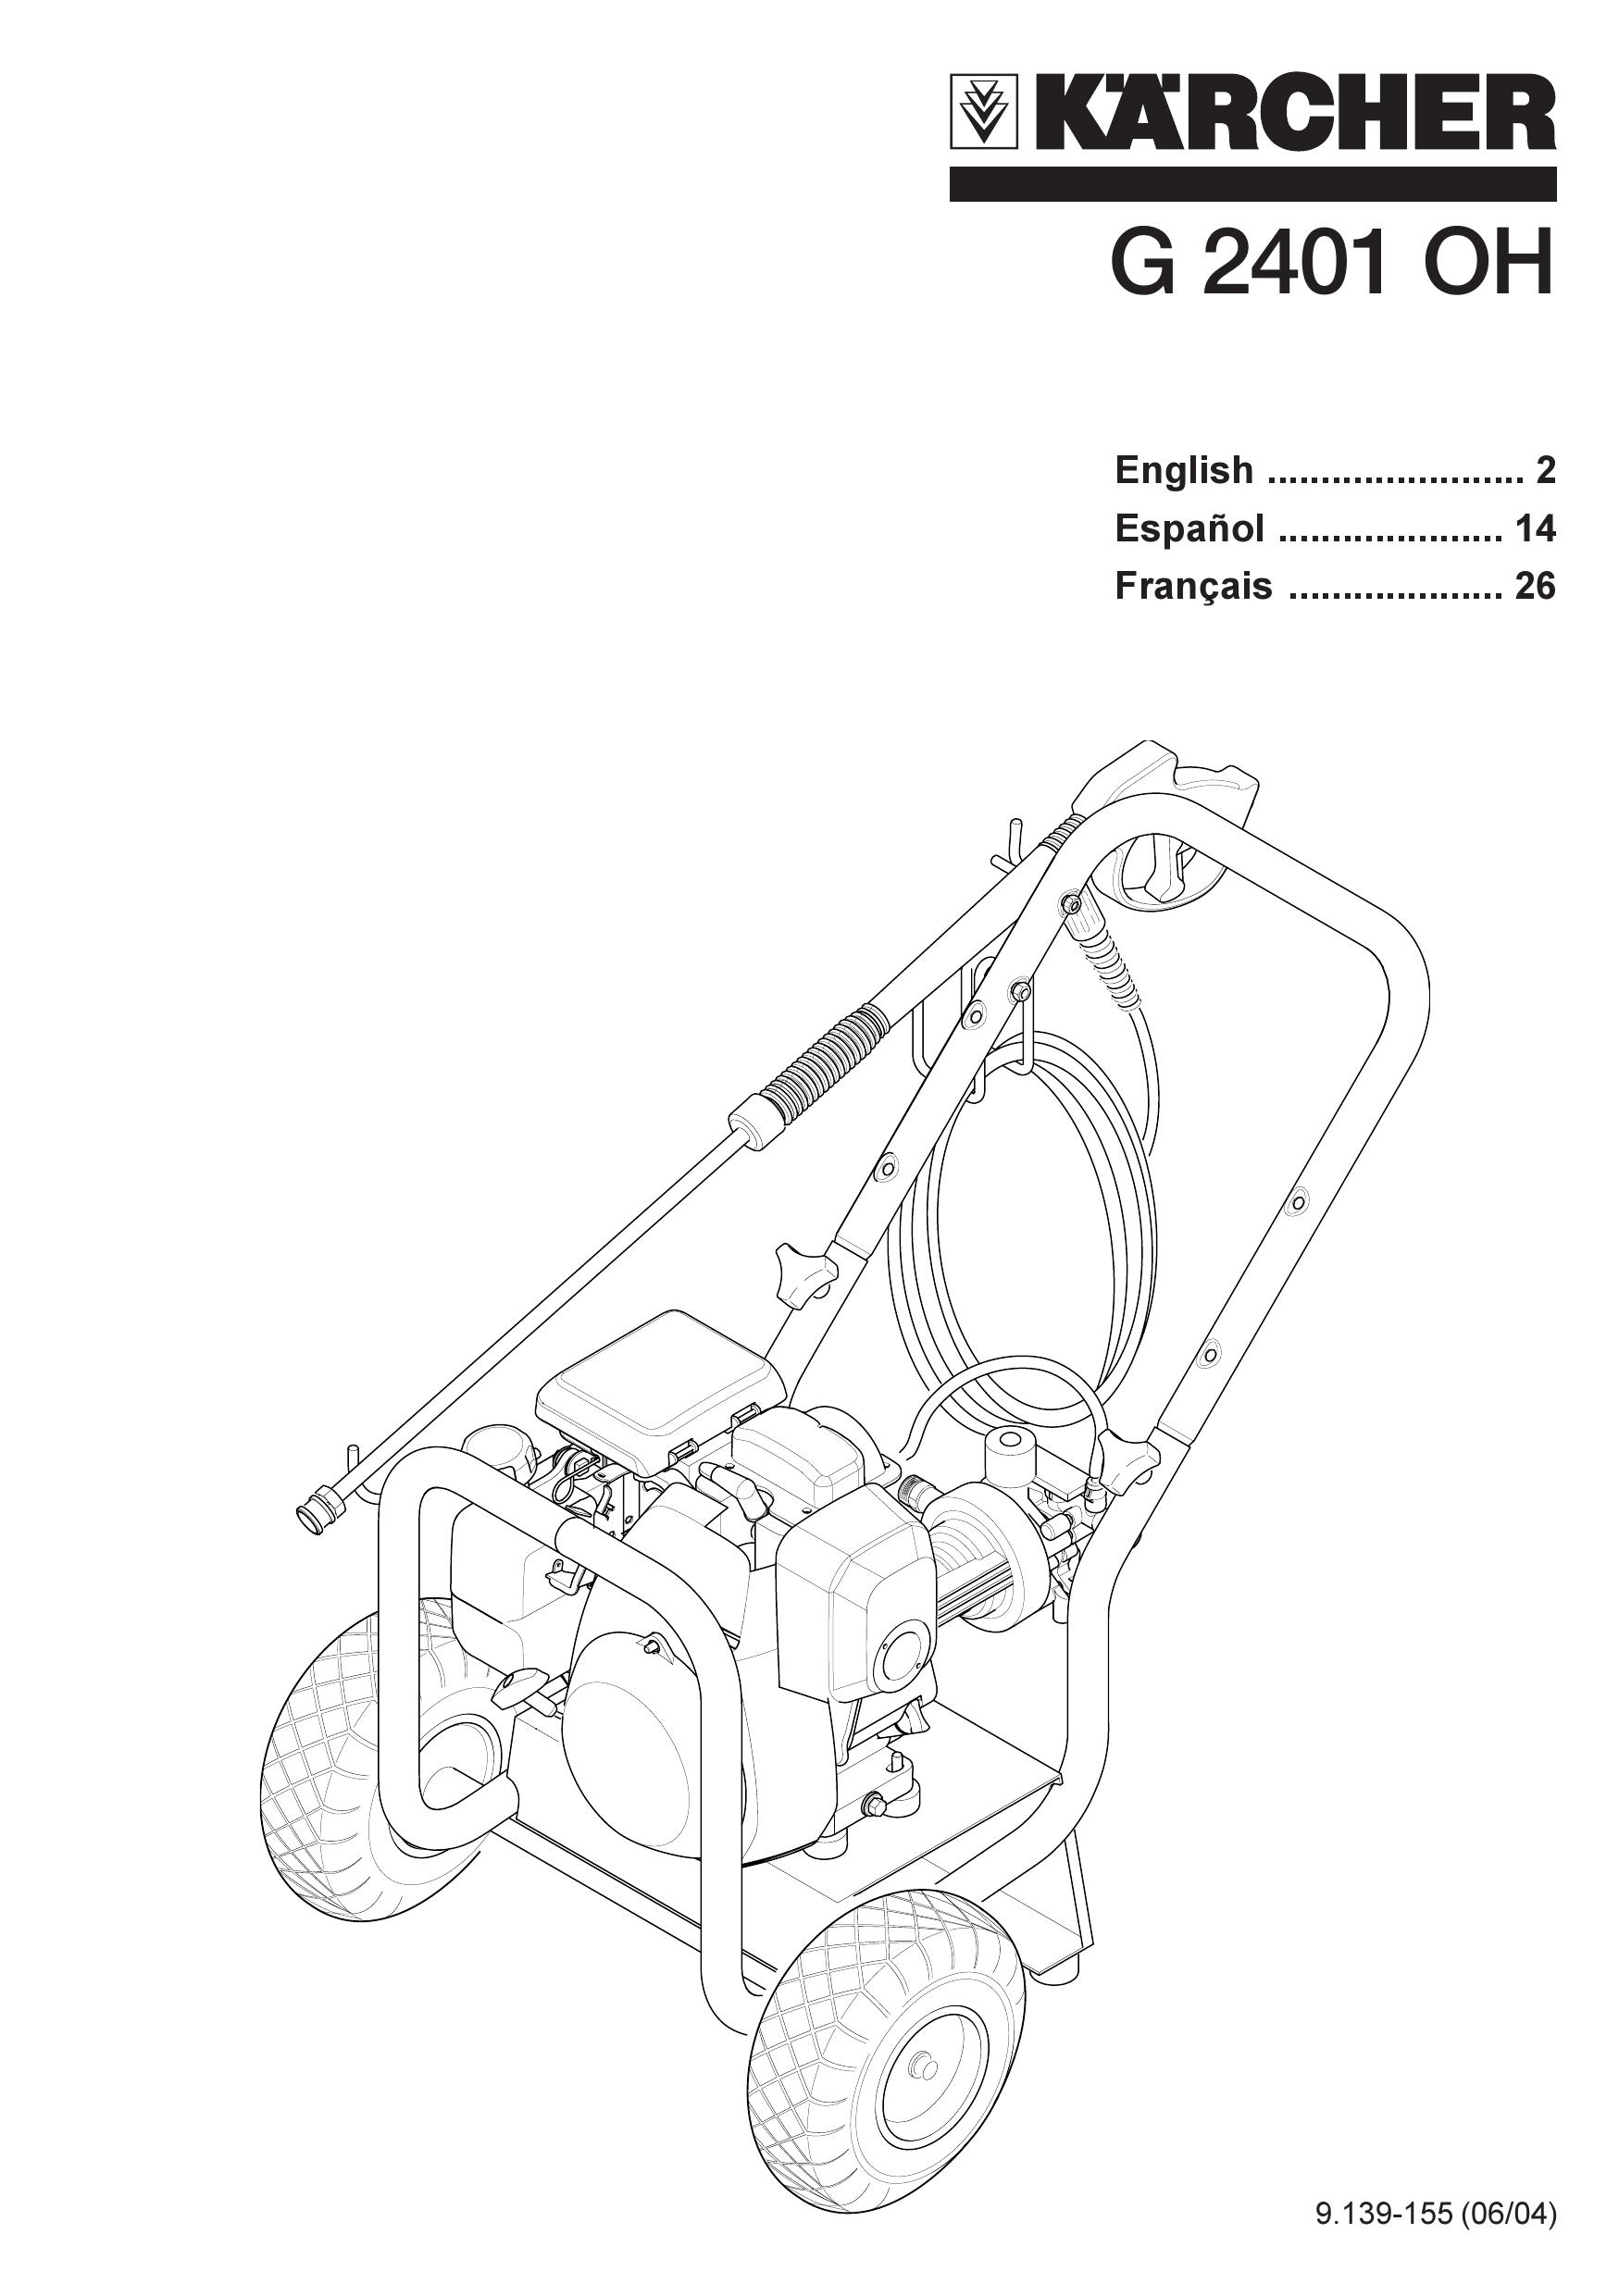 Karcher G 2401 OH Pressure Washer User Manual